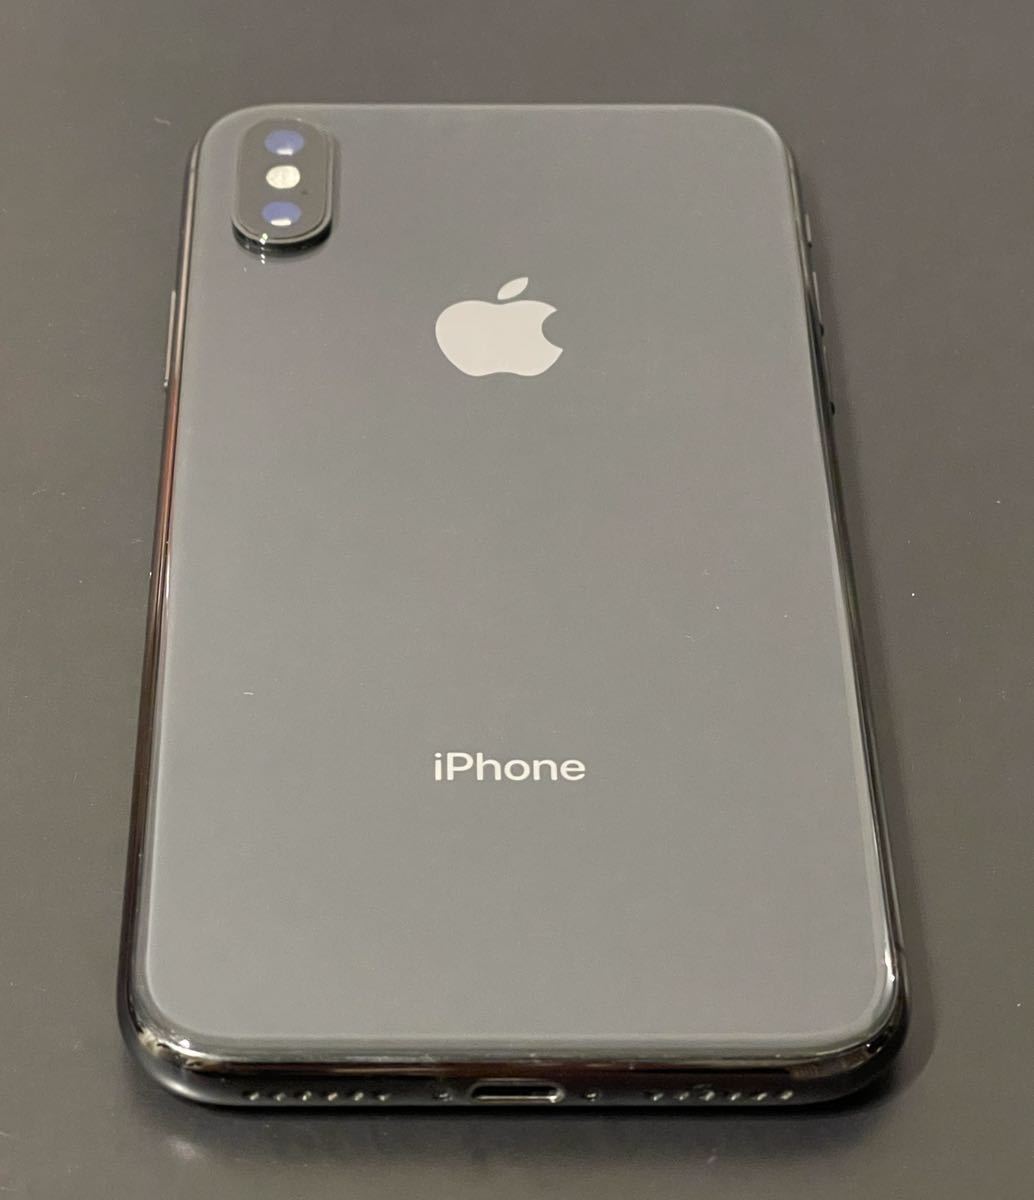 SIMフリー iPhone X Apple スペースグレー 256GB avaja.org